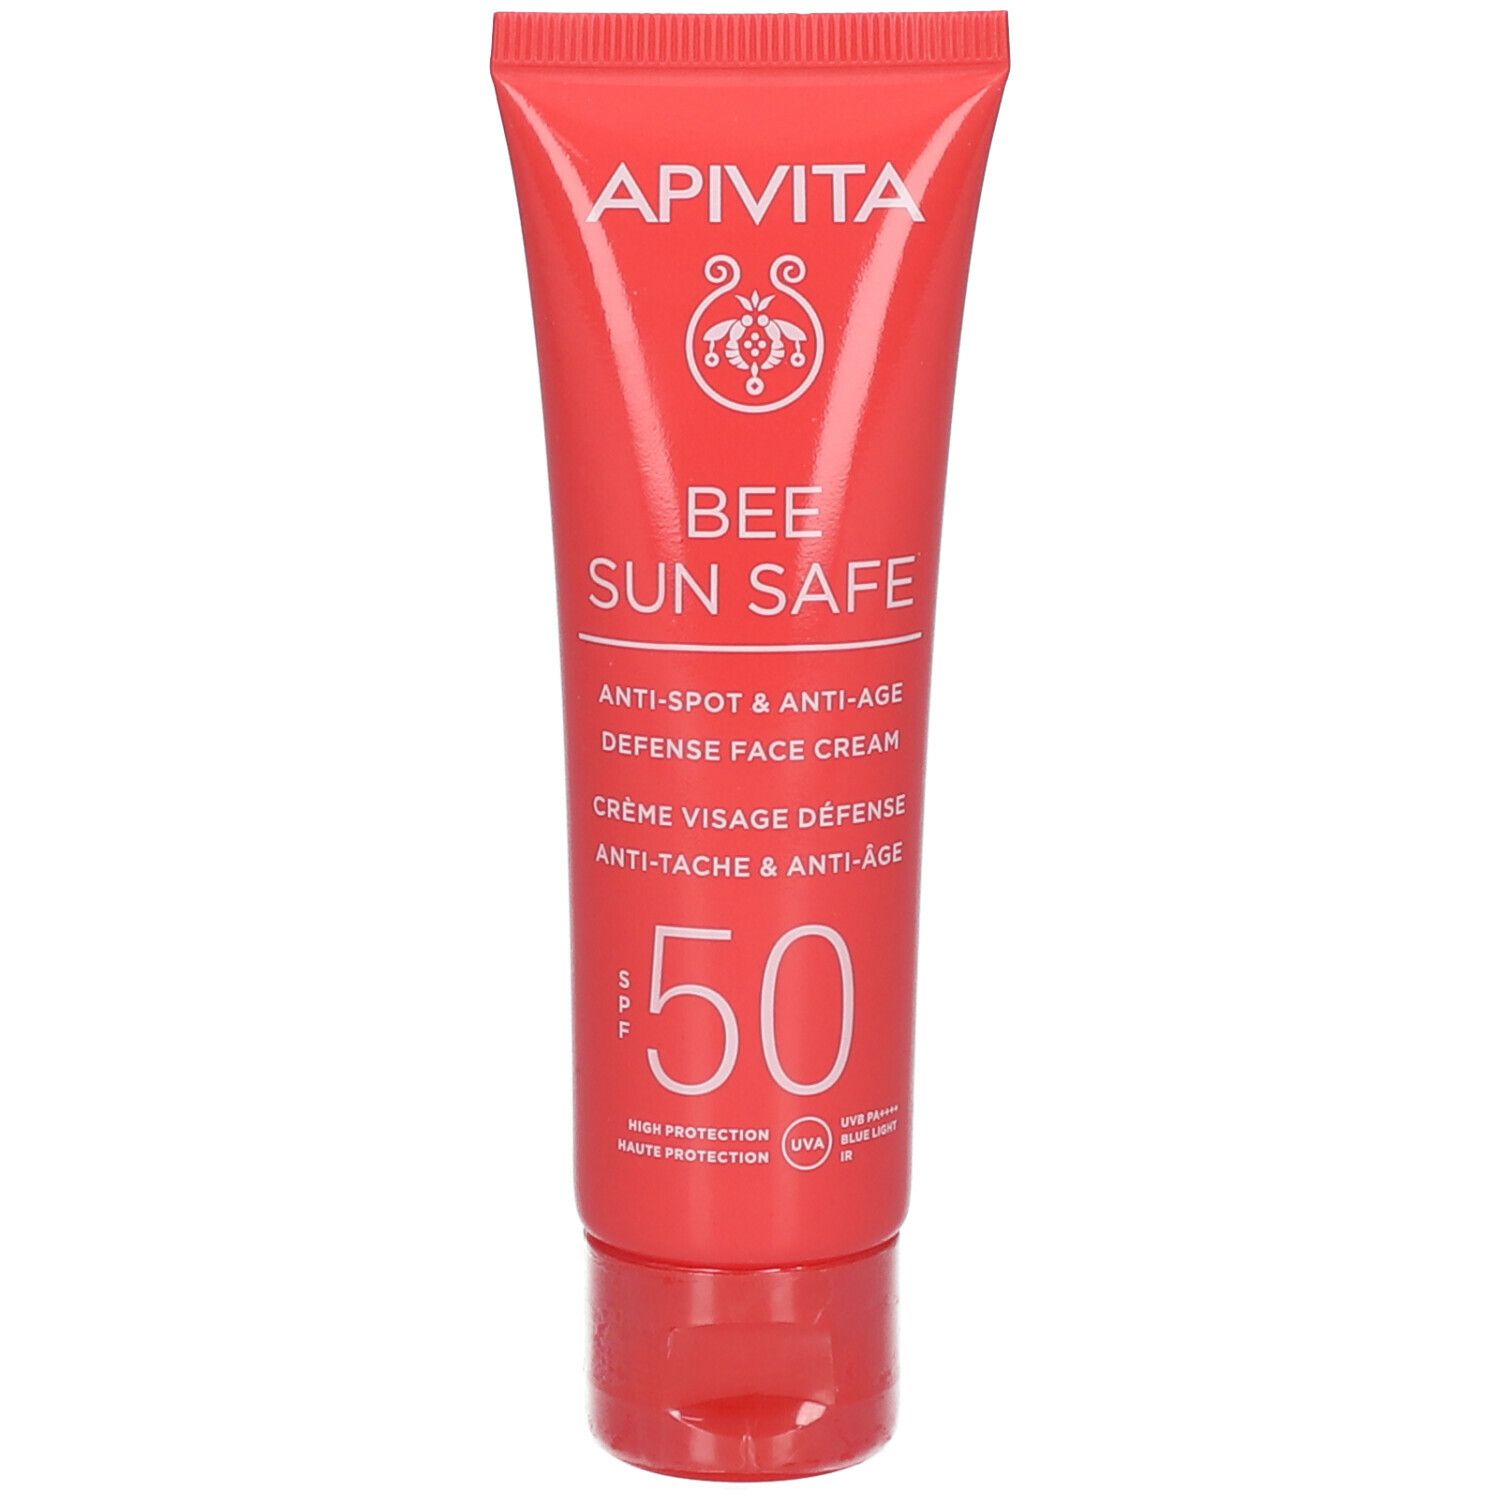 Image of APIVITA Anti-Spot & Anti-Age Defense Face Cream